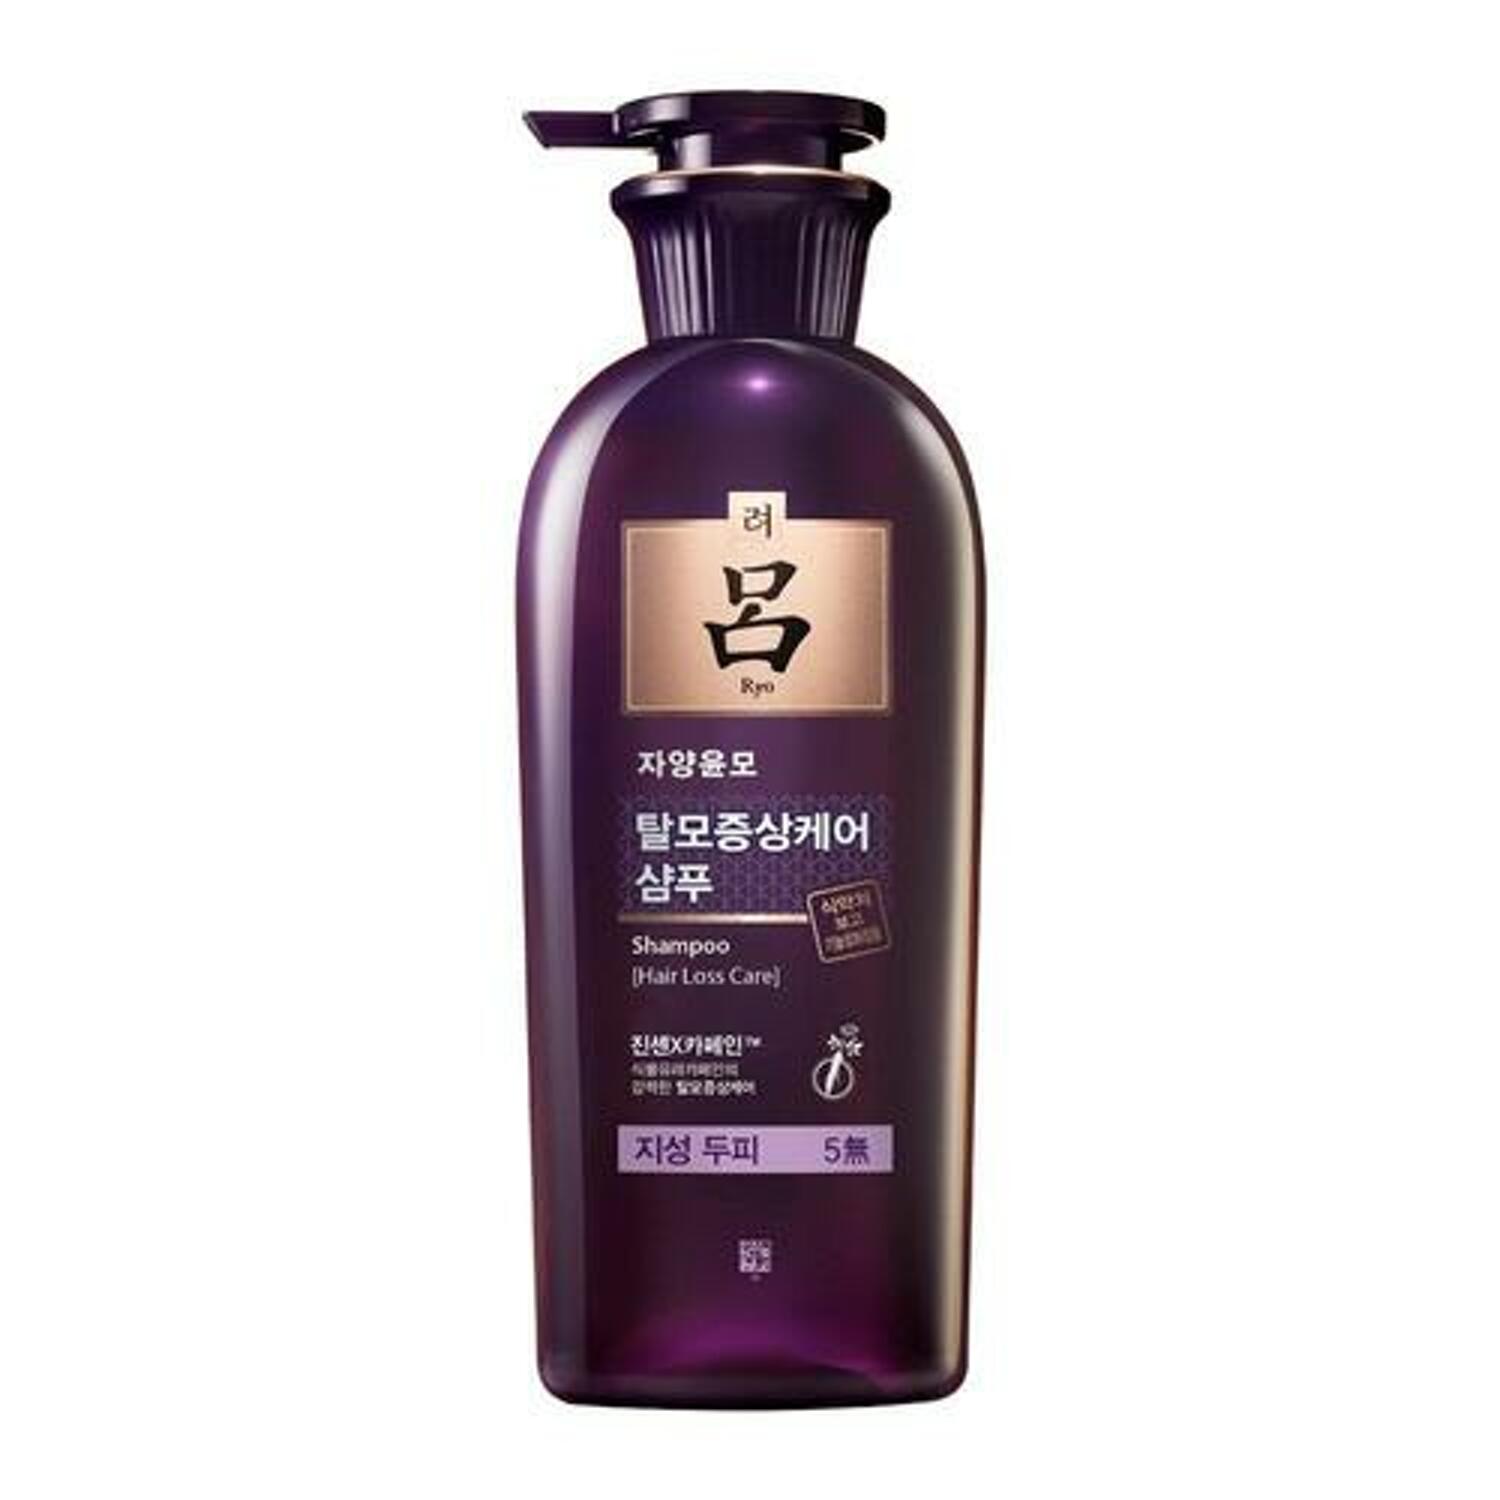 Ryo Hair Loss Expert Care 9EX Shampoo for Oily Scalp 400ml (Purpl